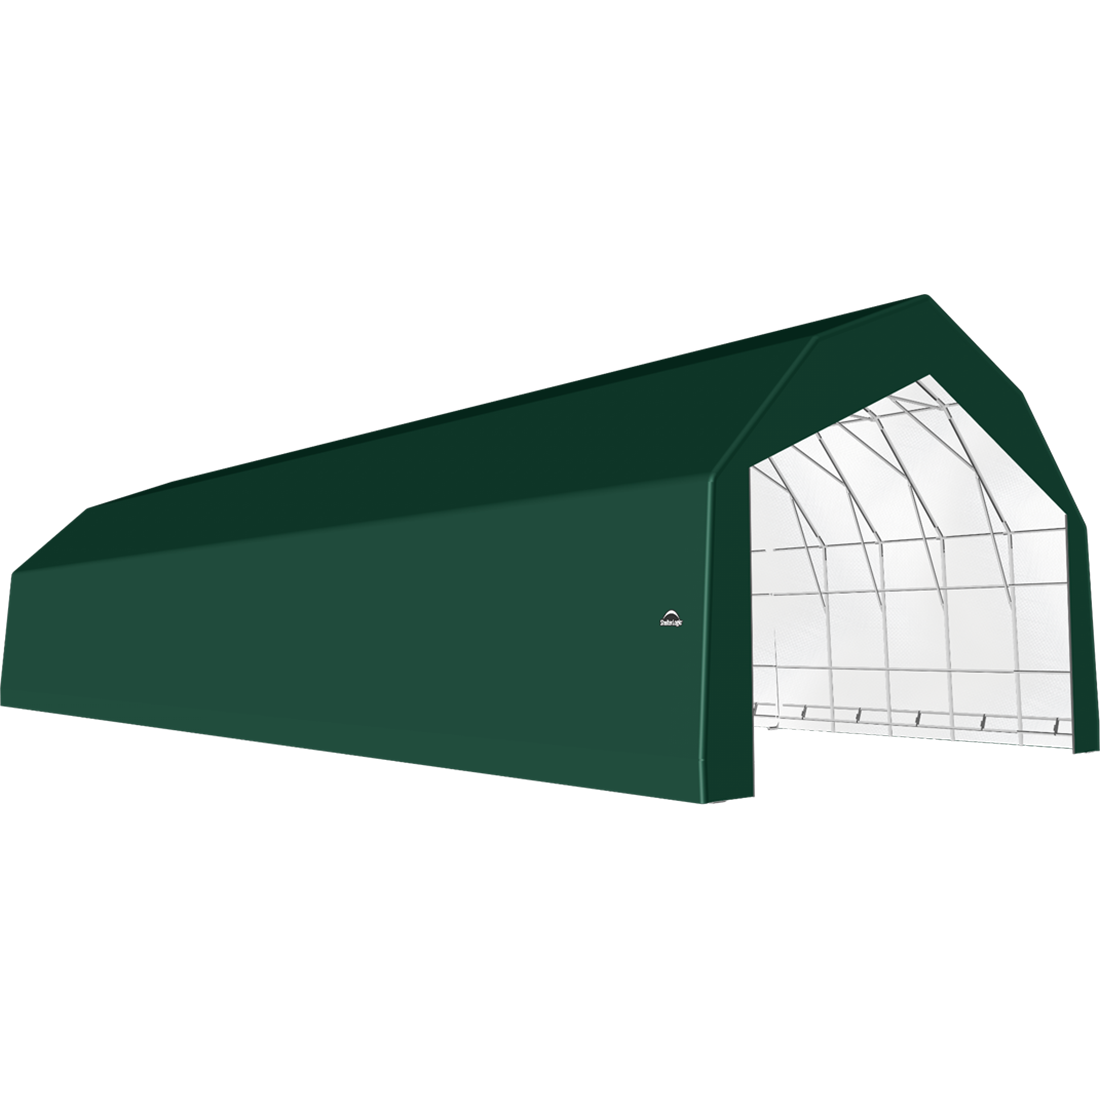 ShelterTech SP Series Barn Shelter, 30 ft. x 76 ft. x 21 ft. Heavy Duty PVC 14.5 oz. Green